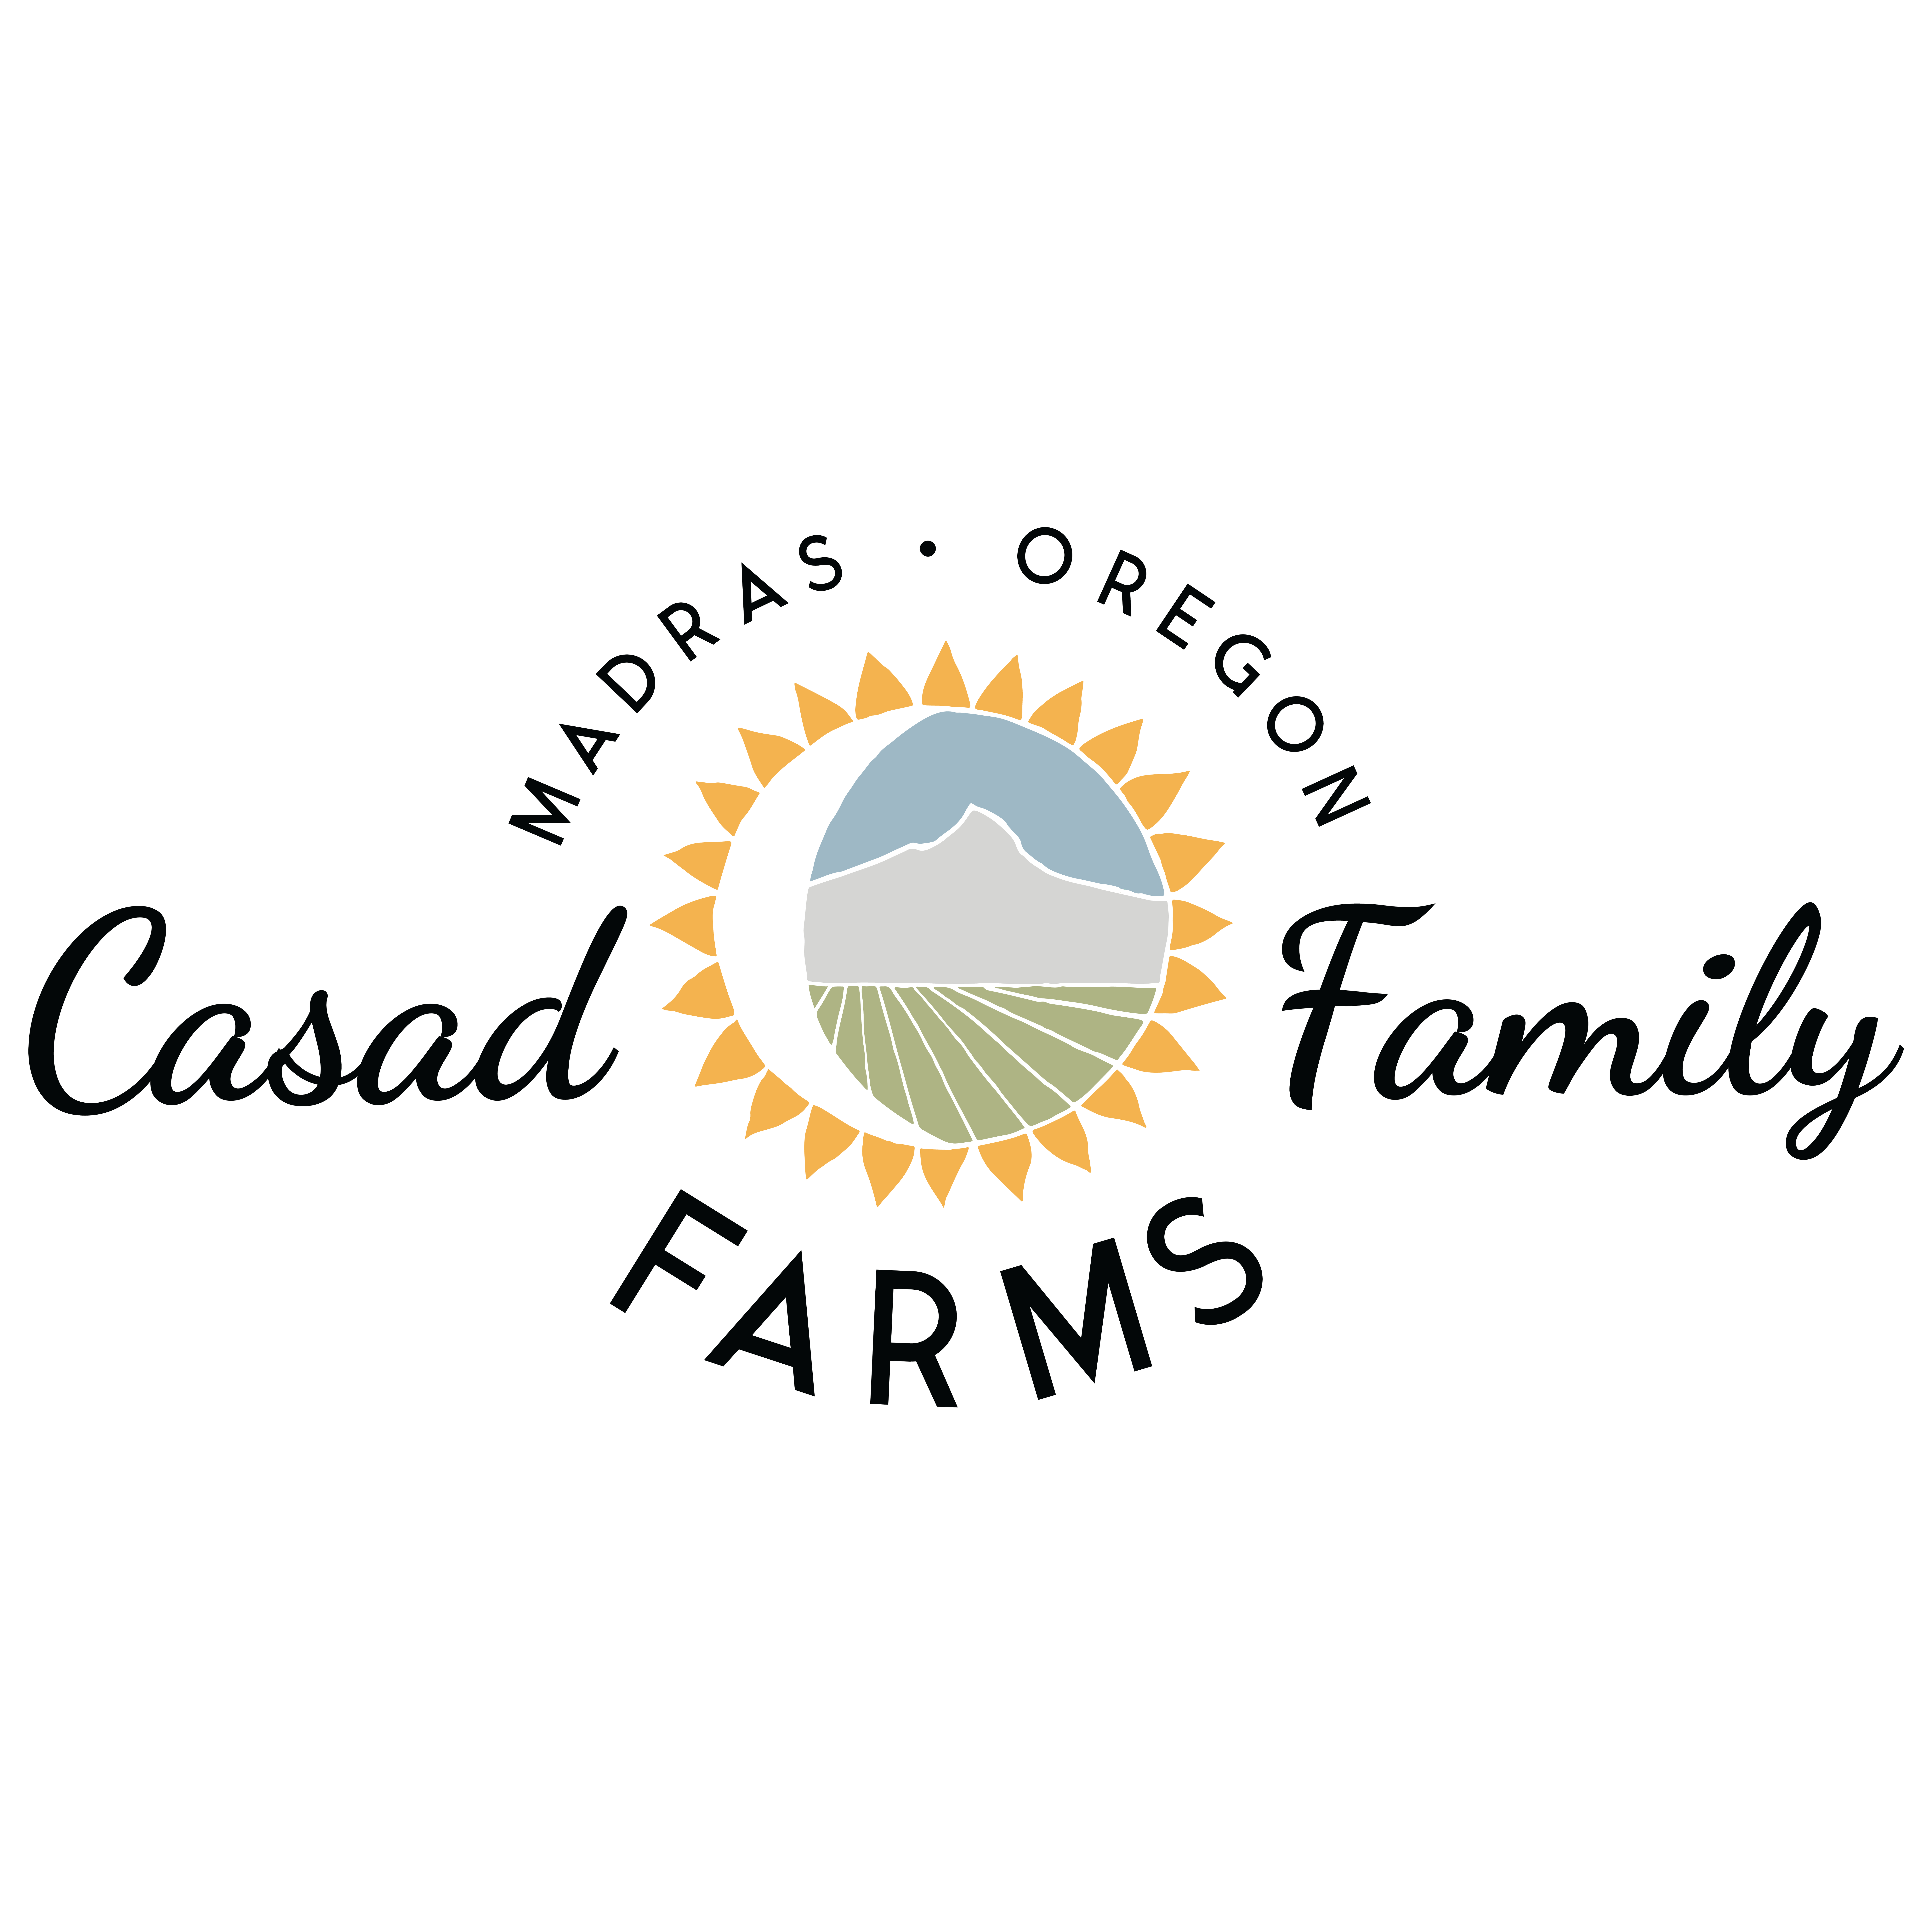 Casad Family Farms